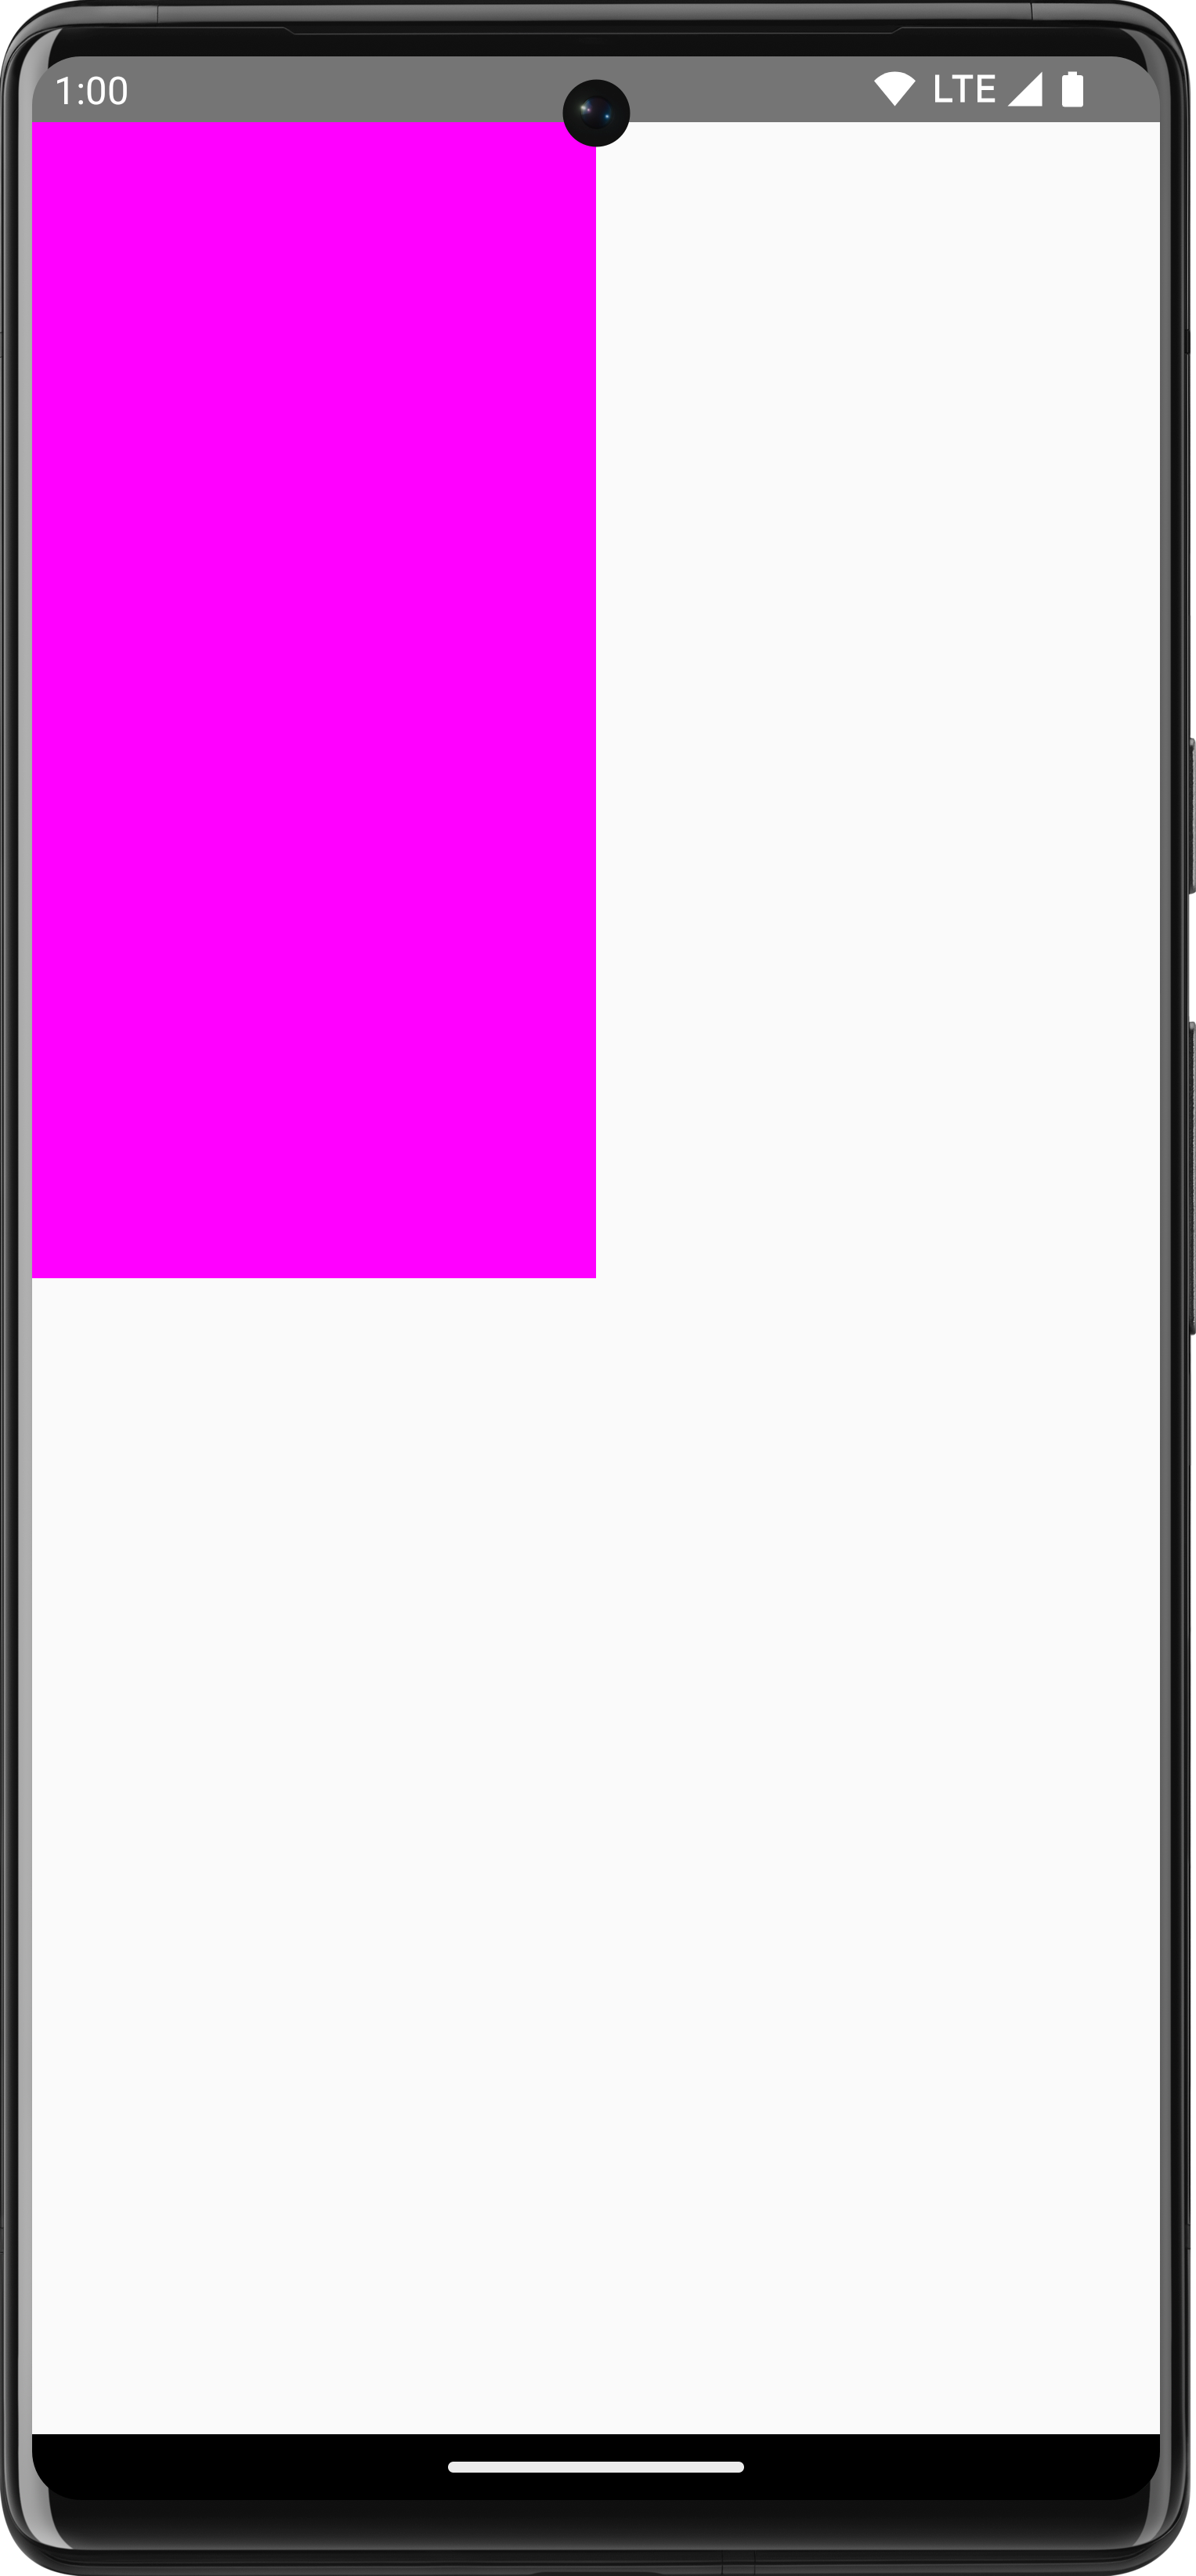 Persegi panjang merah muda digambar dengan latar belakang putih yang menempati seperempat layar